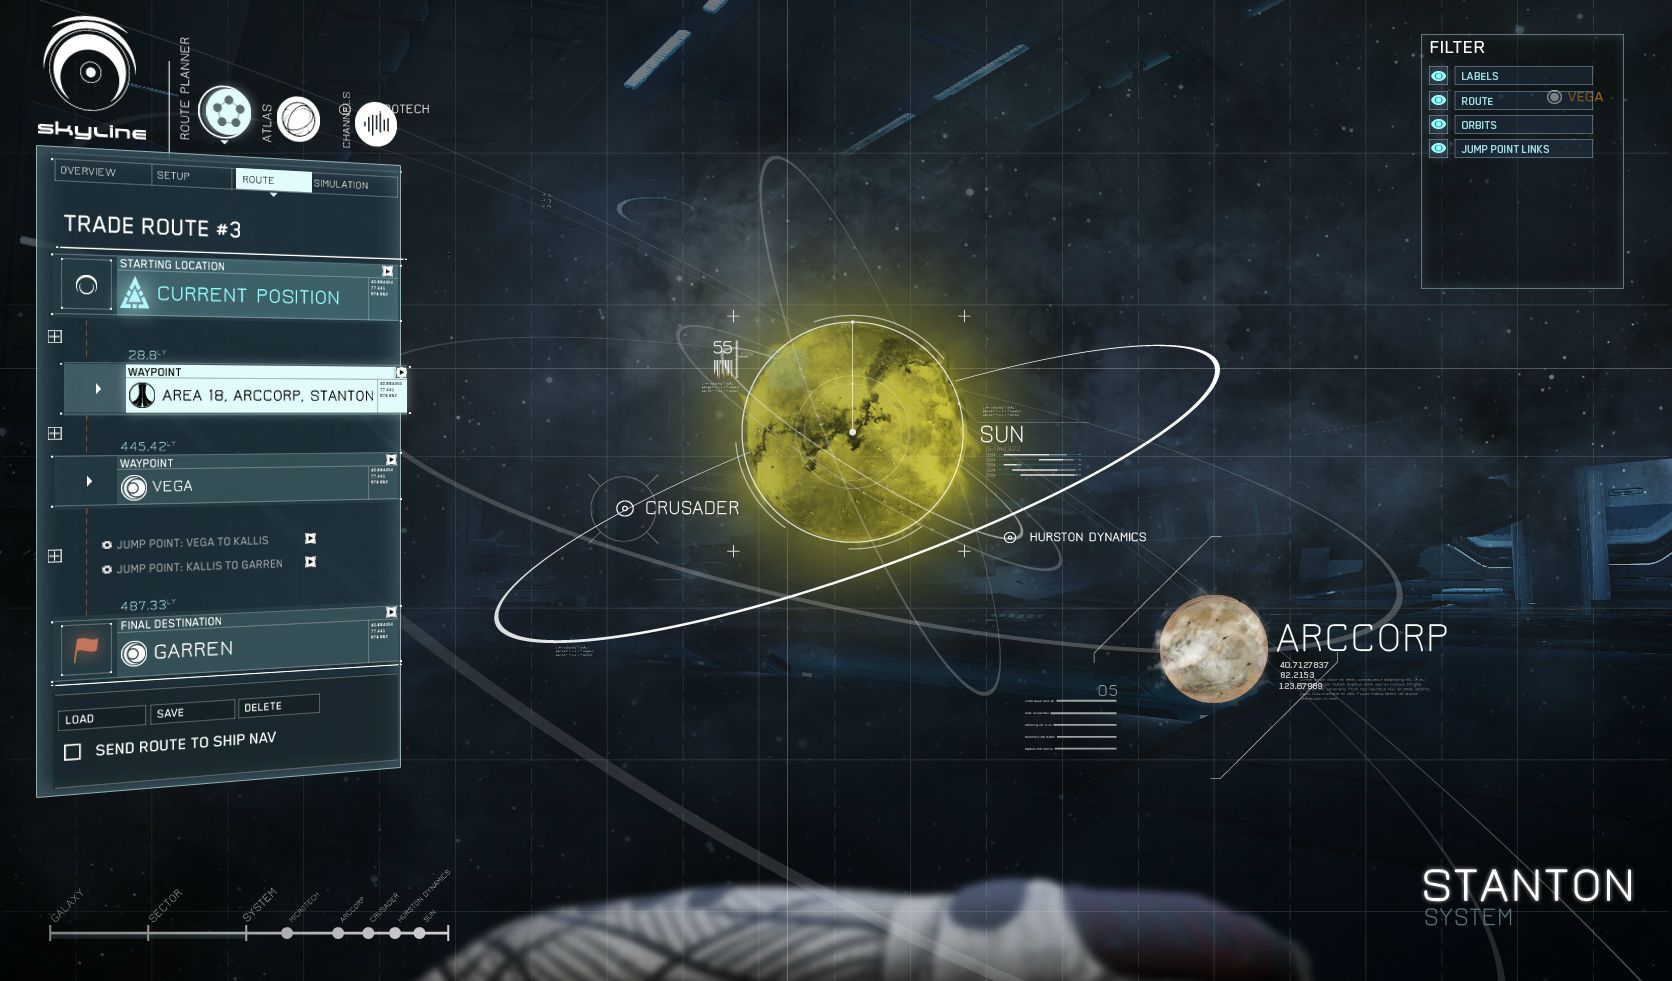 Star Citizen Alpha 3.10 released, improves gameplay mechanics, combat  tools, planet tech & more